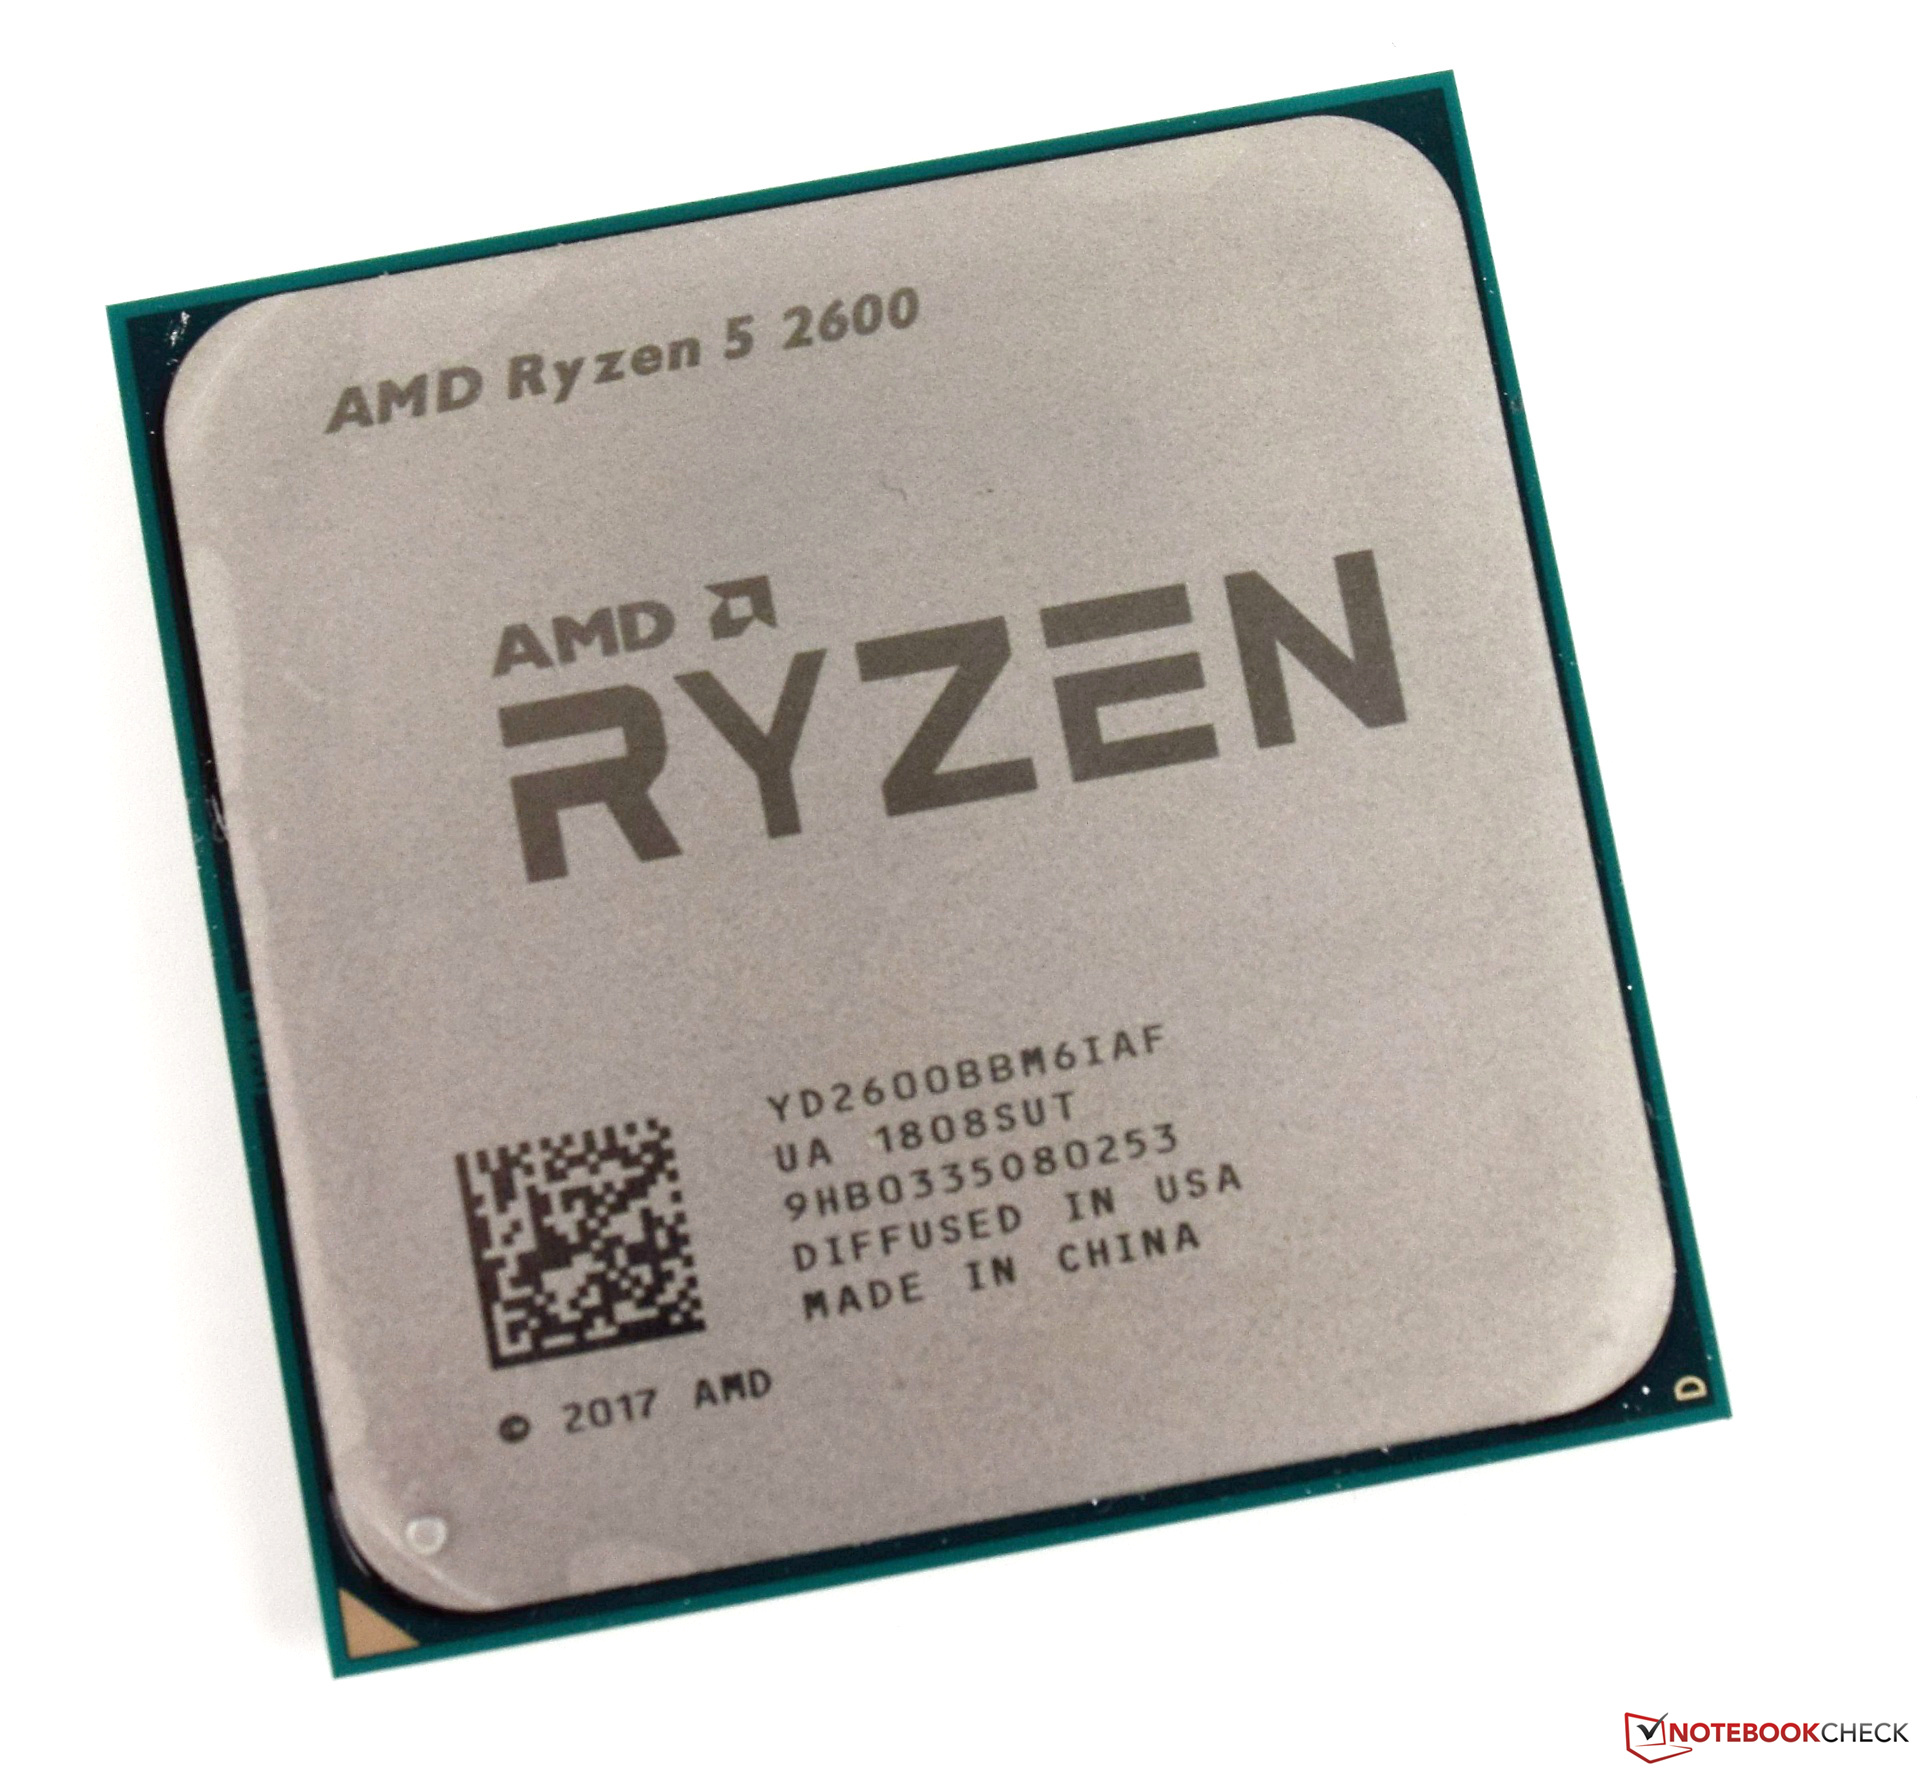 AMD Ryzen 5 2600 Socket AM4 working product - パーツ